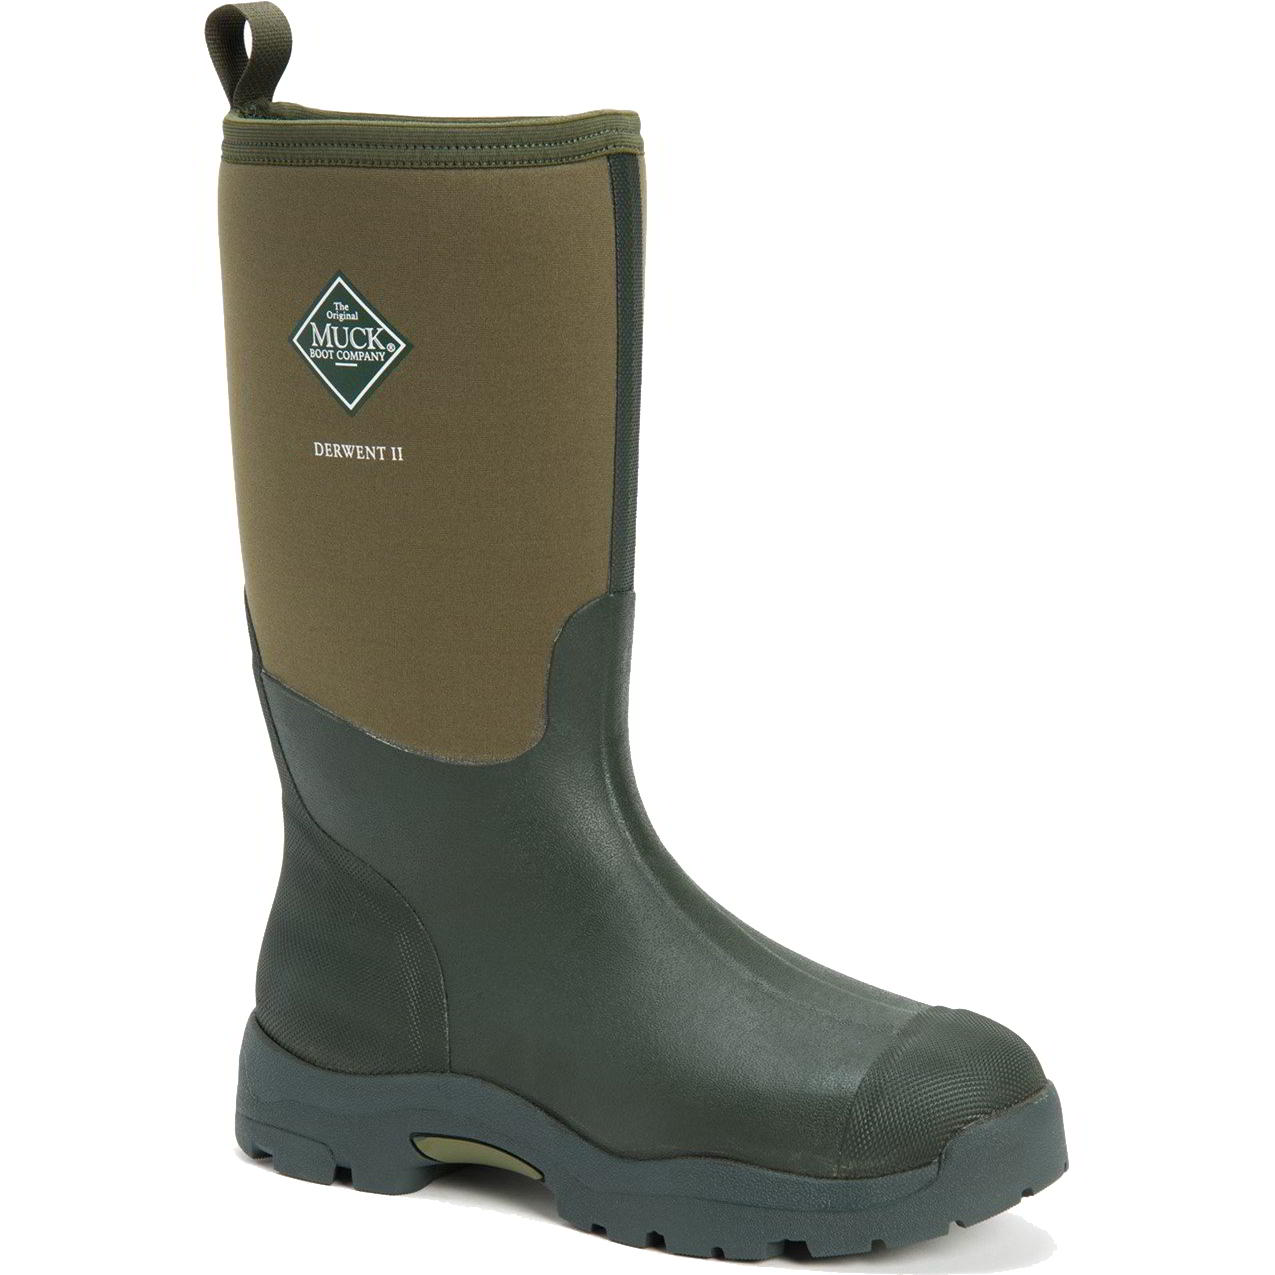 Muck Boots Mens Derwent II Neoprene Wellies Rain - Moss 2951